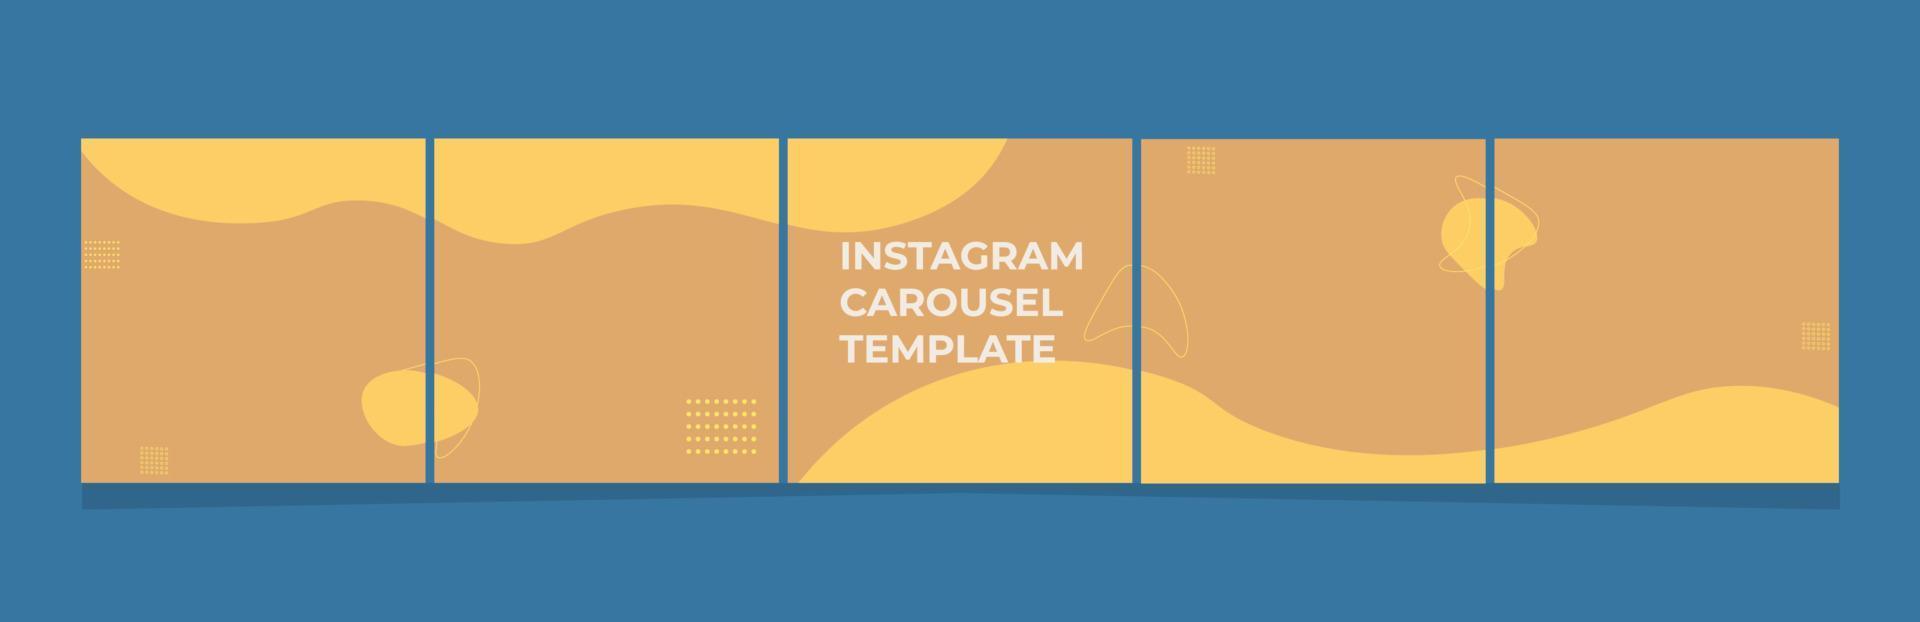 Template de Carrossel para Instagram